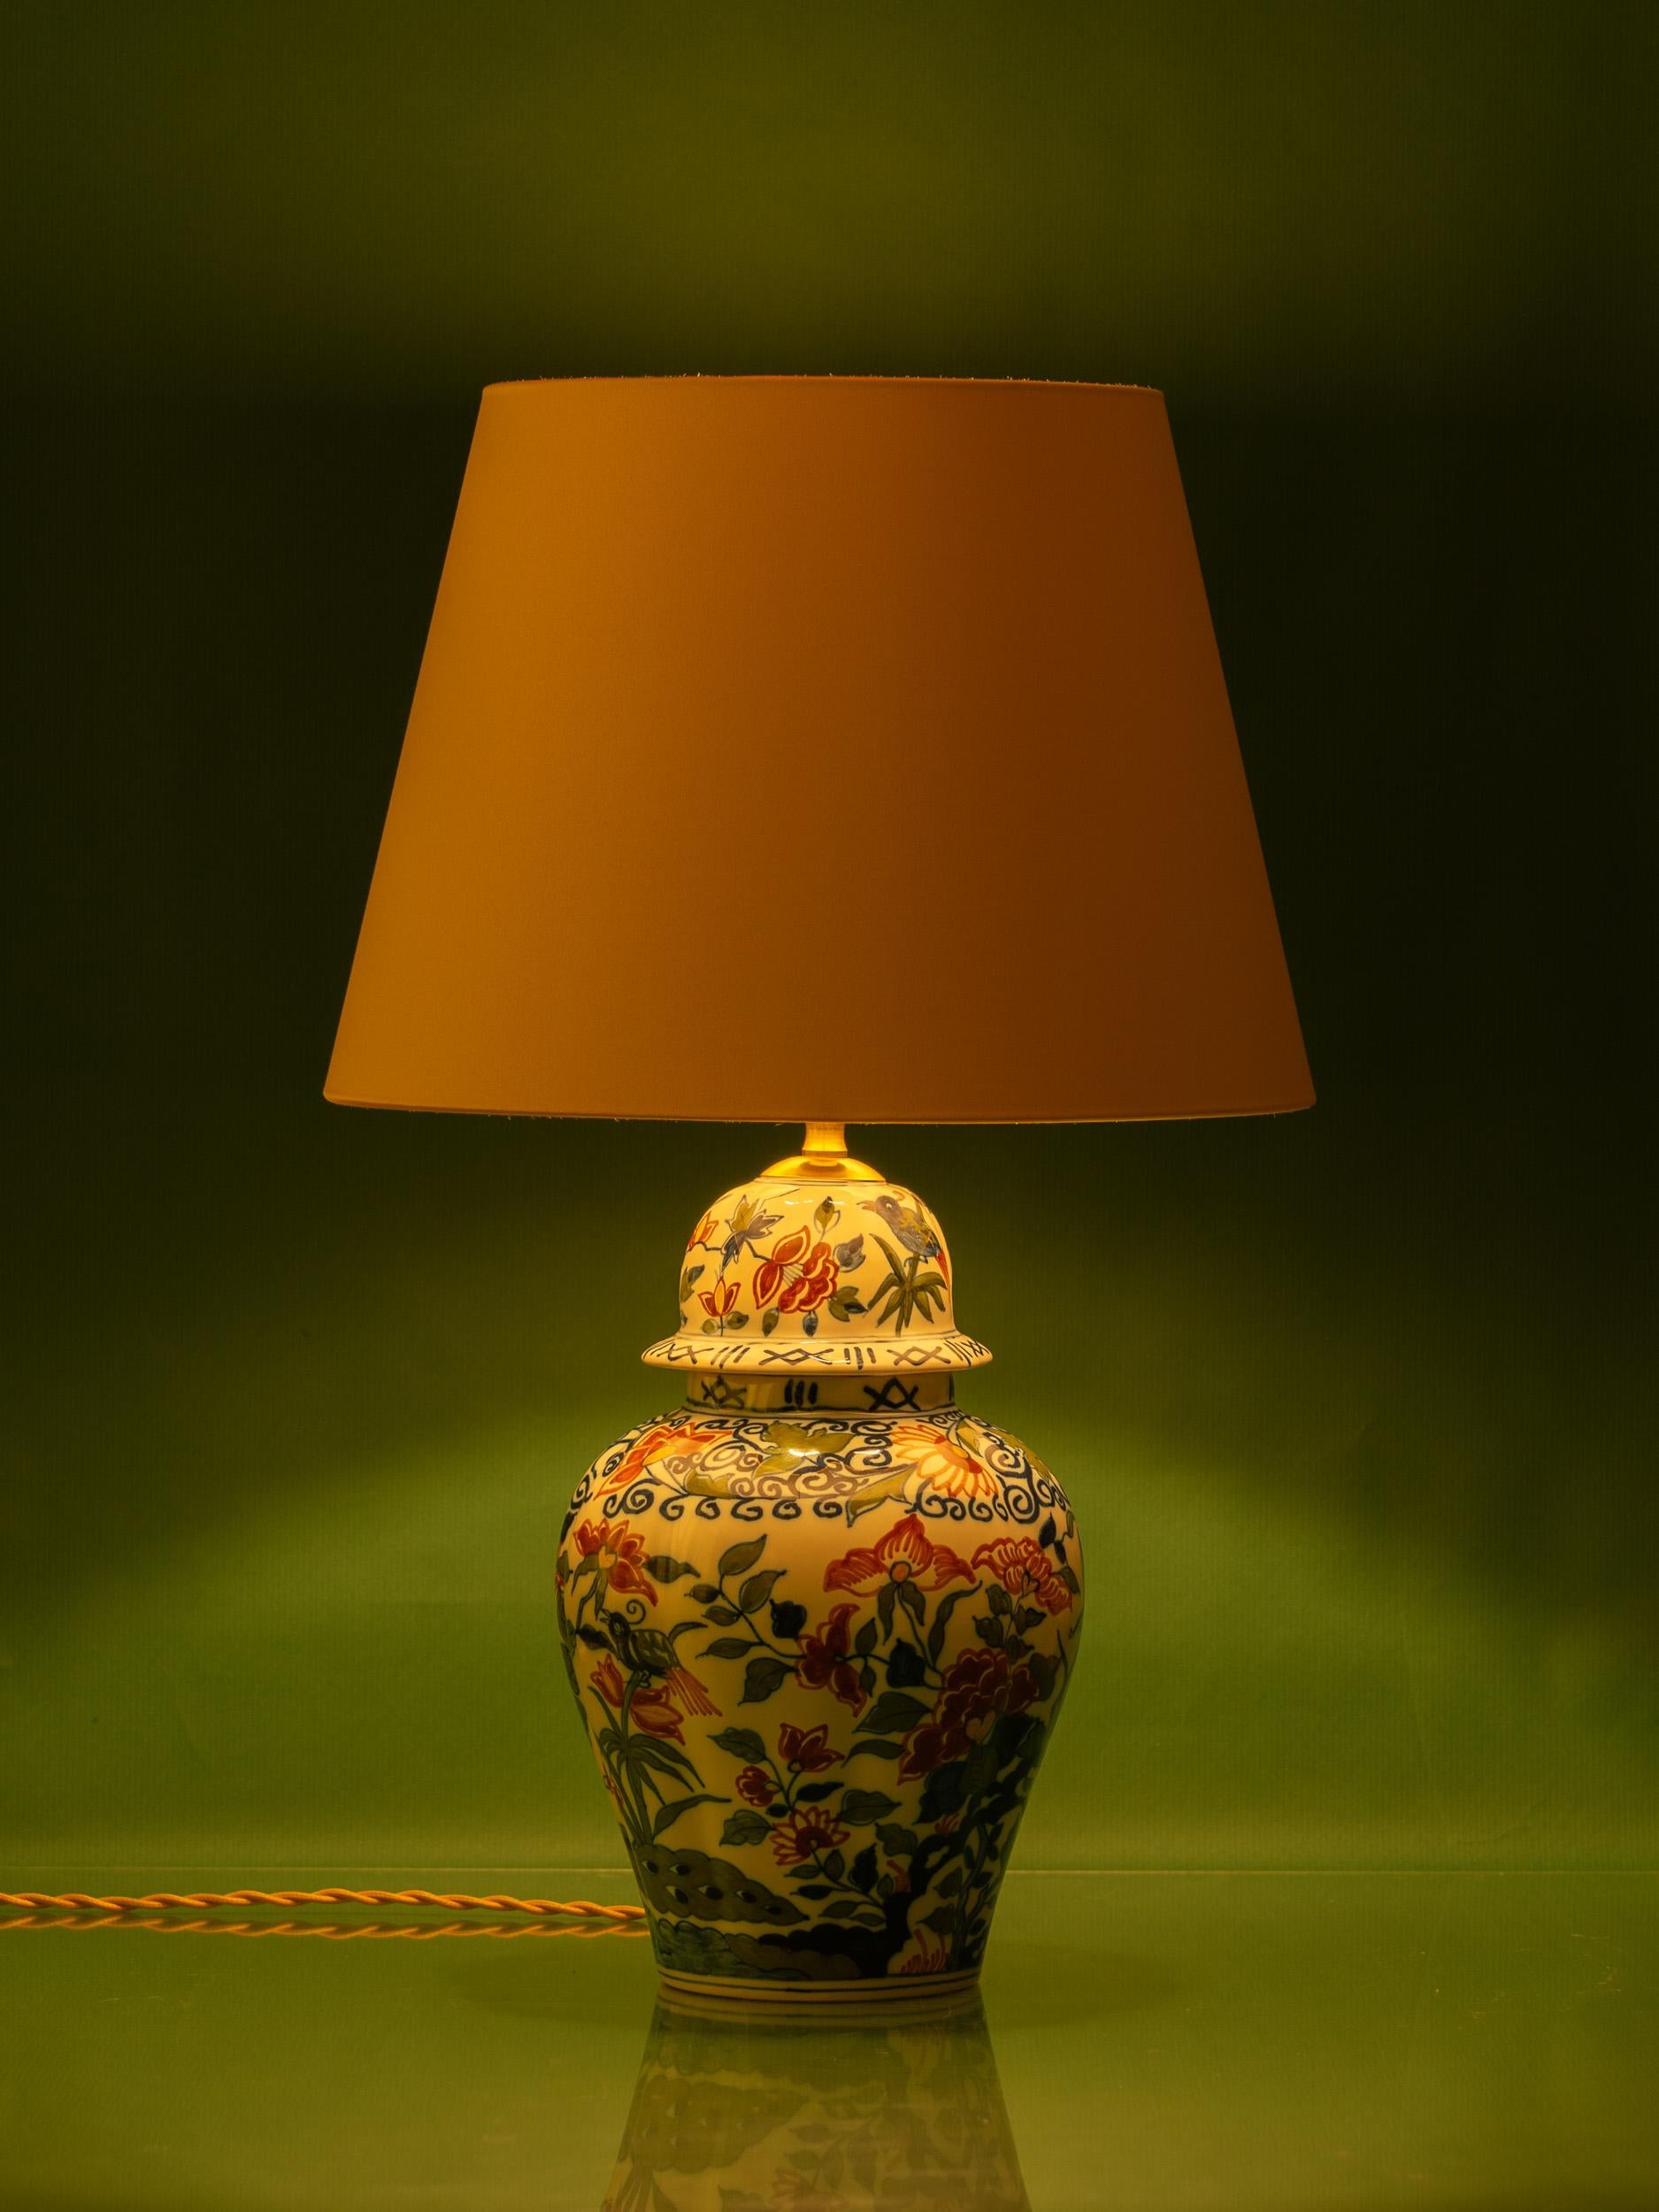 Royal Tichelaar Makkum Delft Table Lamps, Hand-Painted For Sale 7